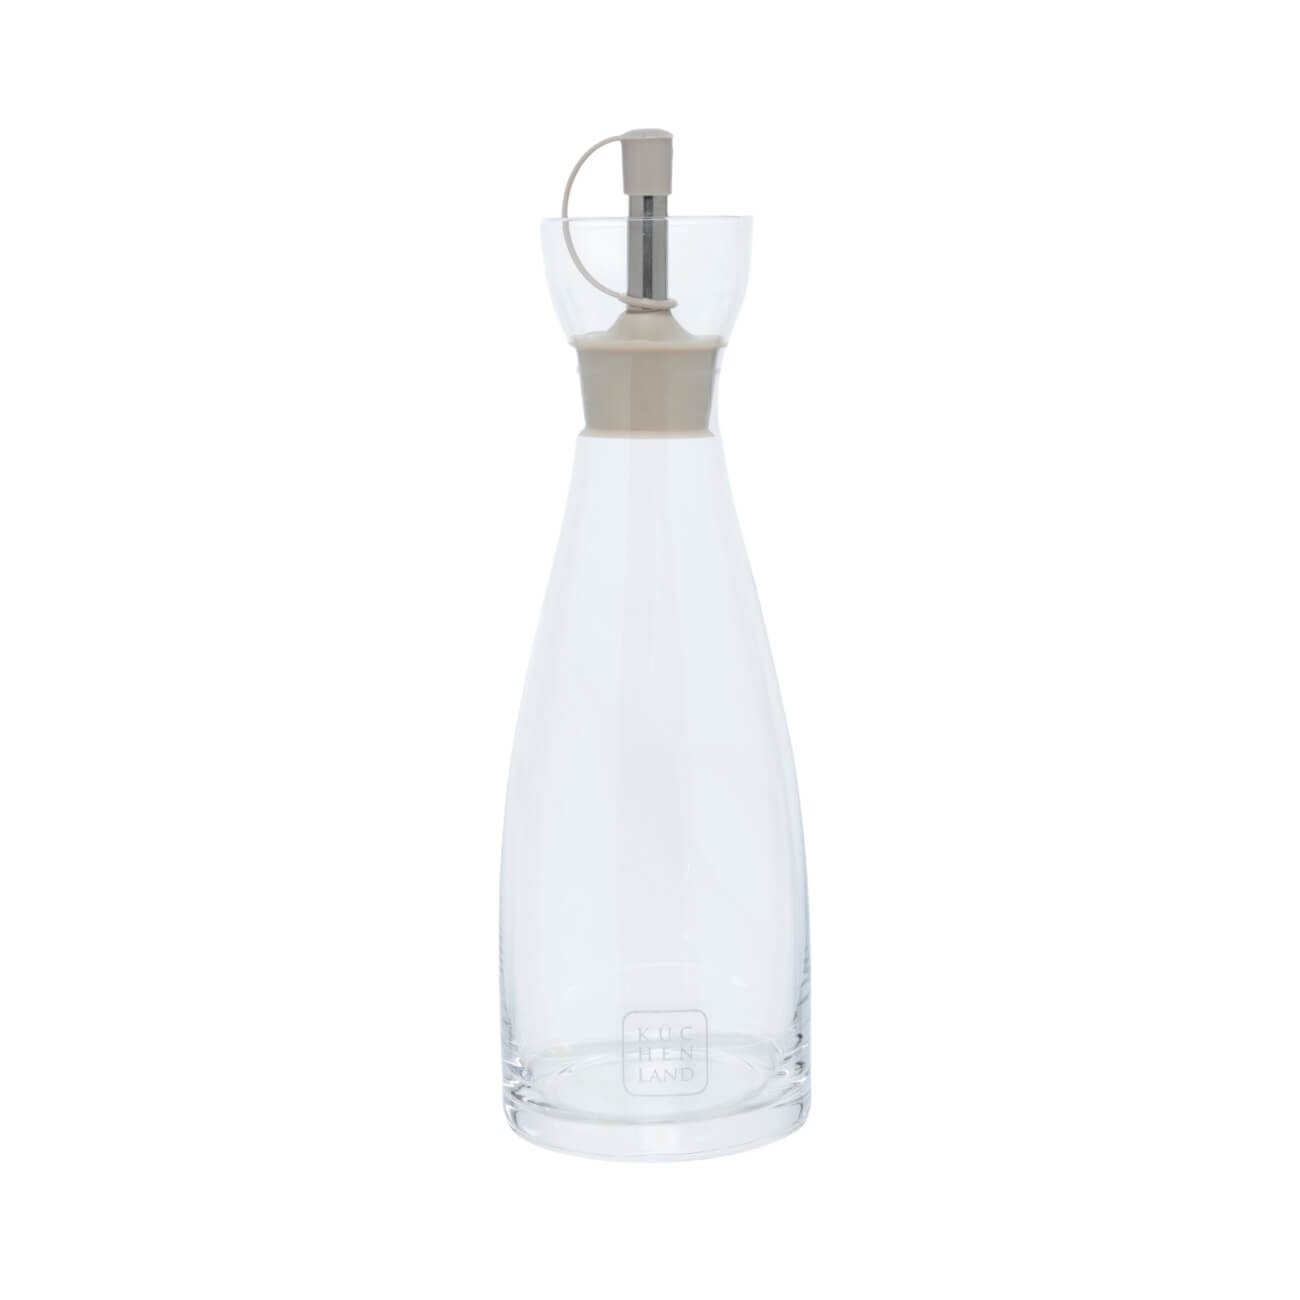 Бутылка для масла или уксуса, 350 мл, с дозаторам, стекло/силикон, бежевая, Soft Kitchen емкость для масла и уксуса zеller